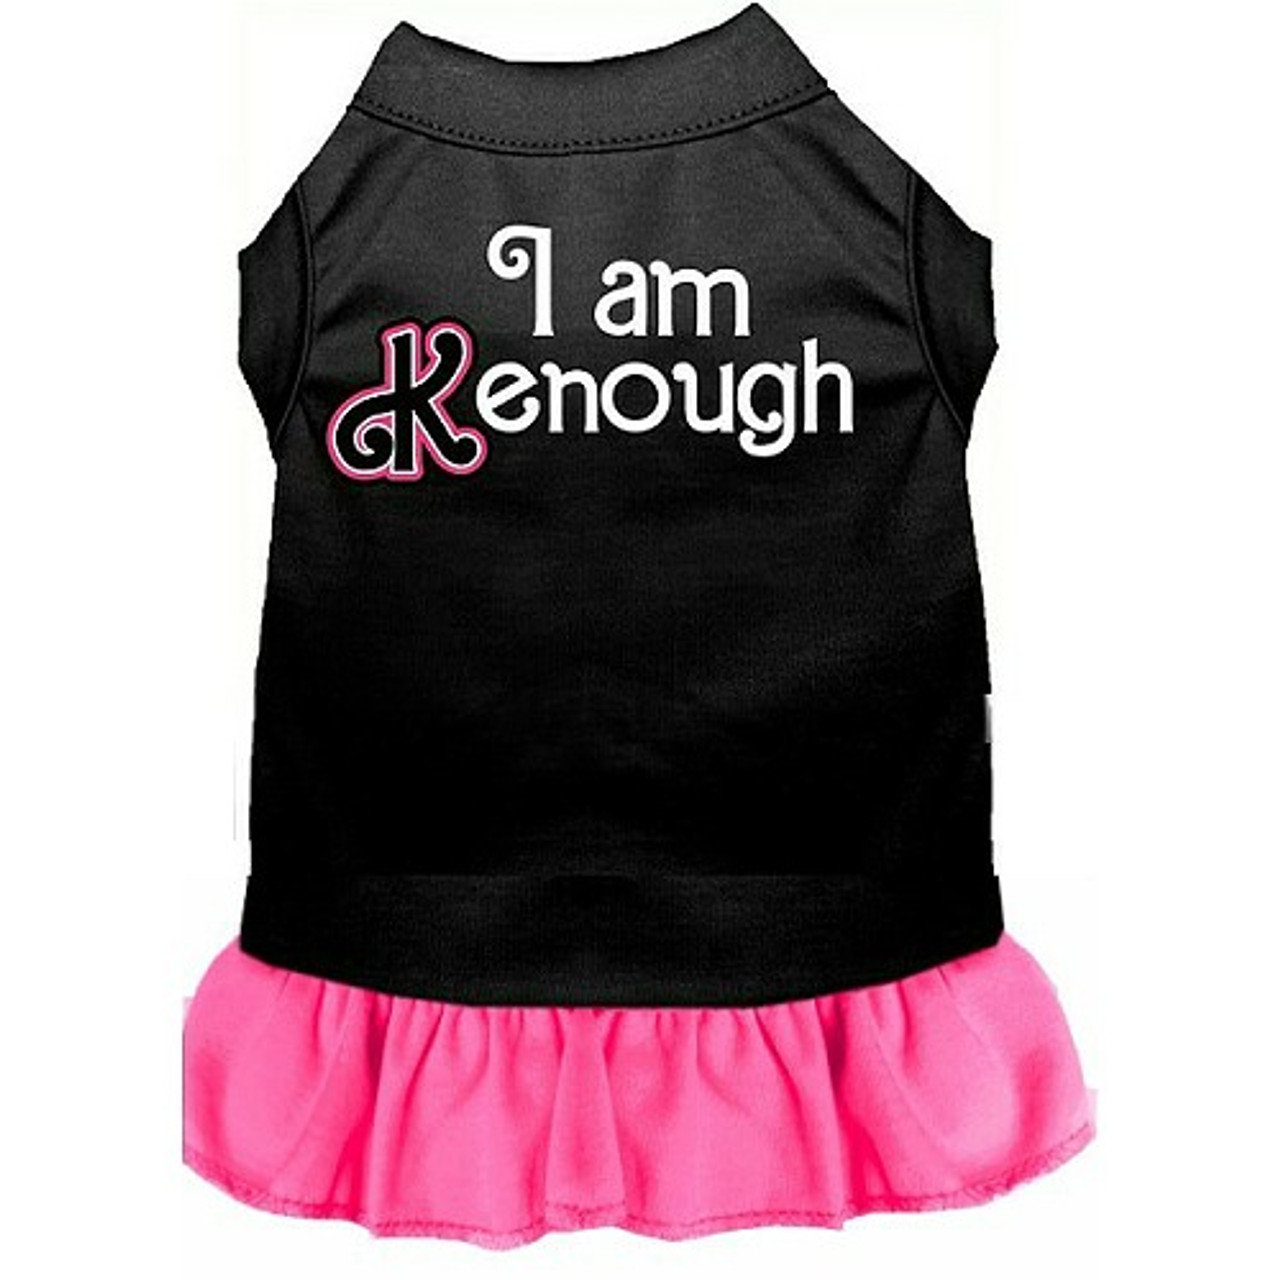 I Am Kenough Screen Print Dog Shirt - Bright Pink